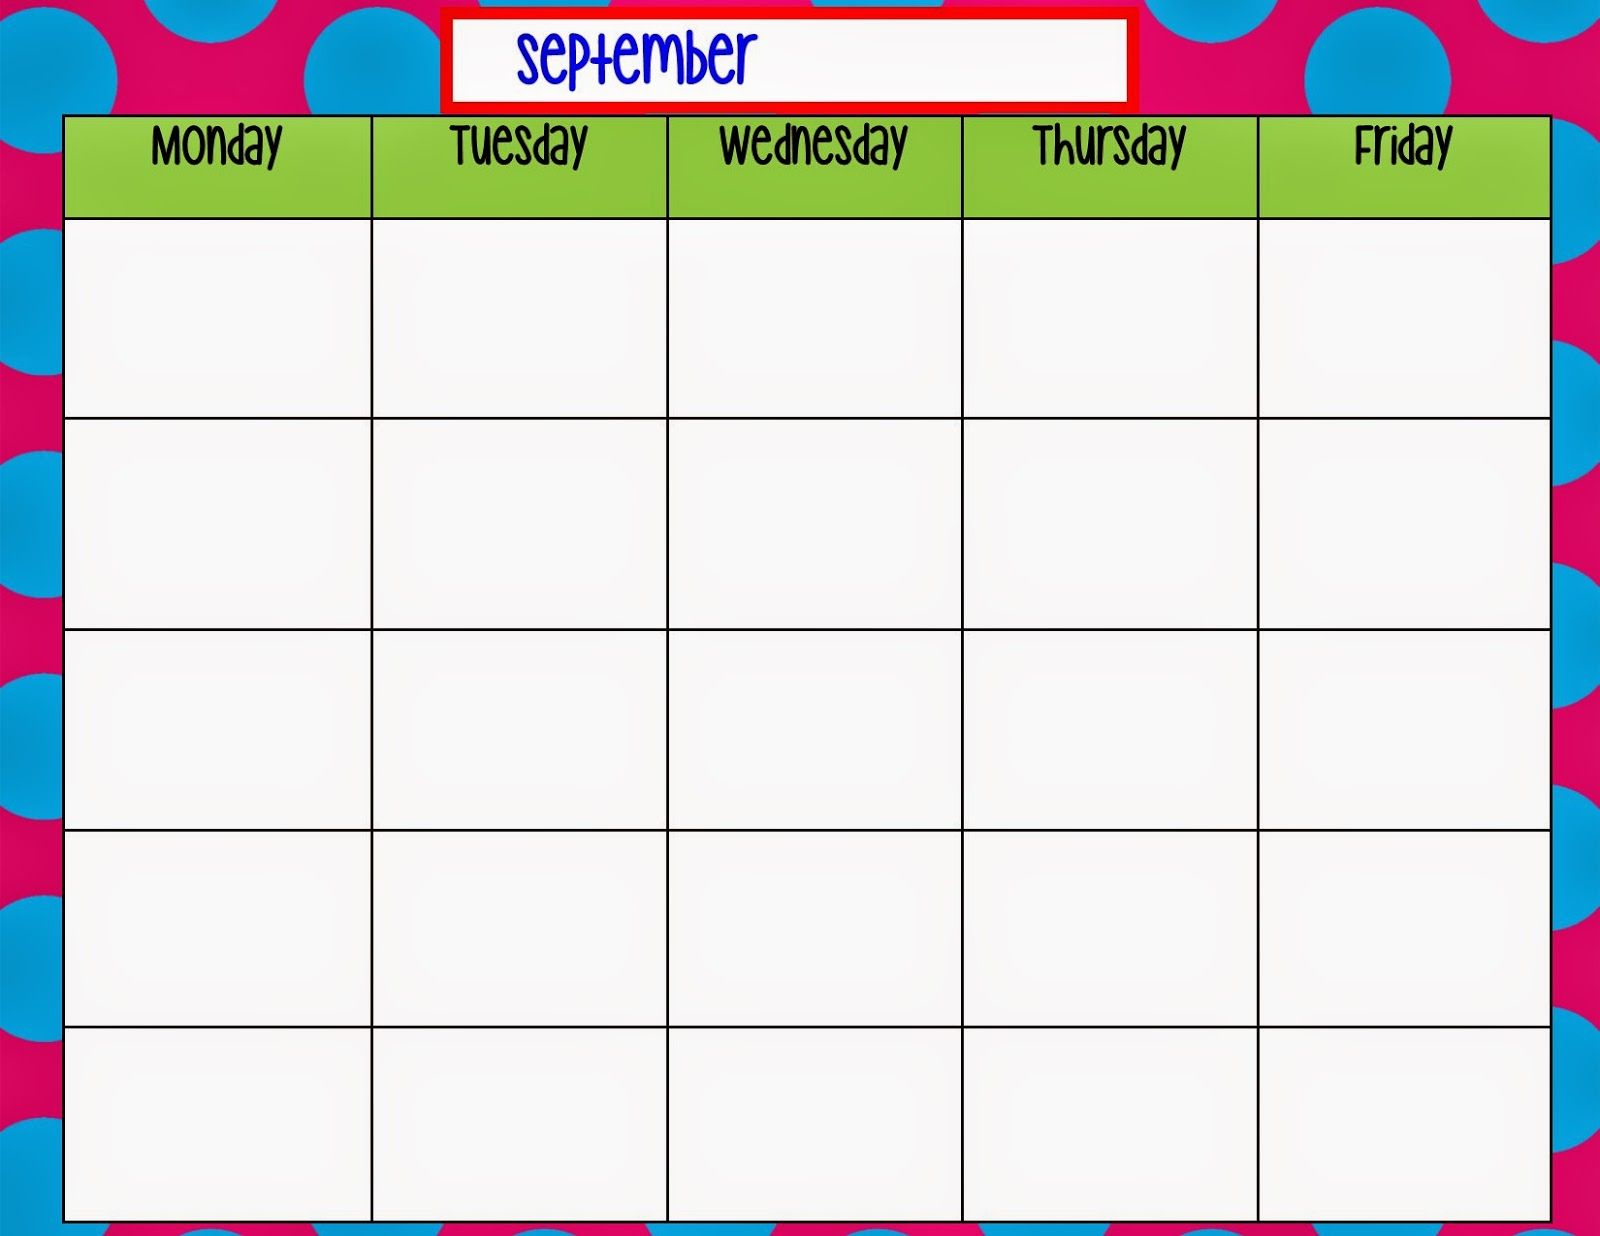 Monday Through Friday Calendar Template | Weekly Calendar regarding Monday Through Friday Weekly Calendar Template